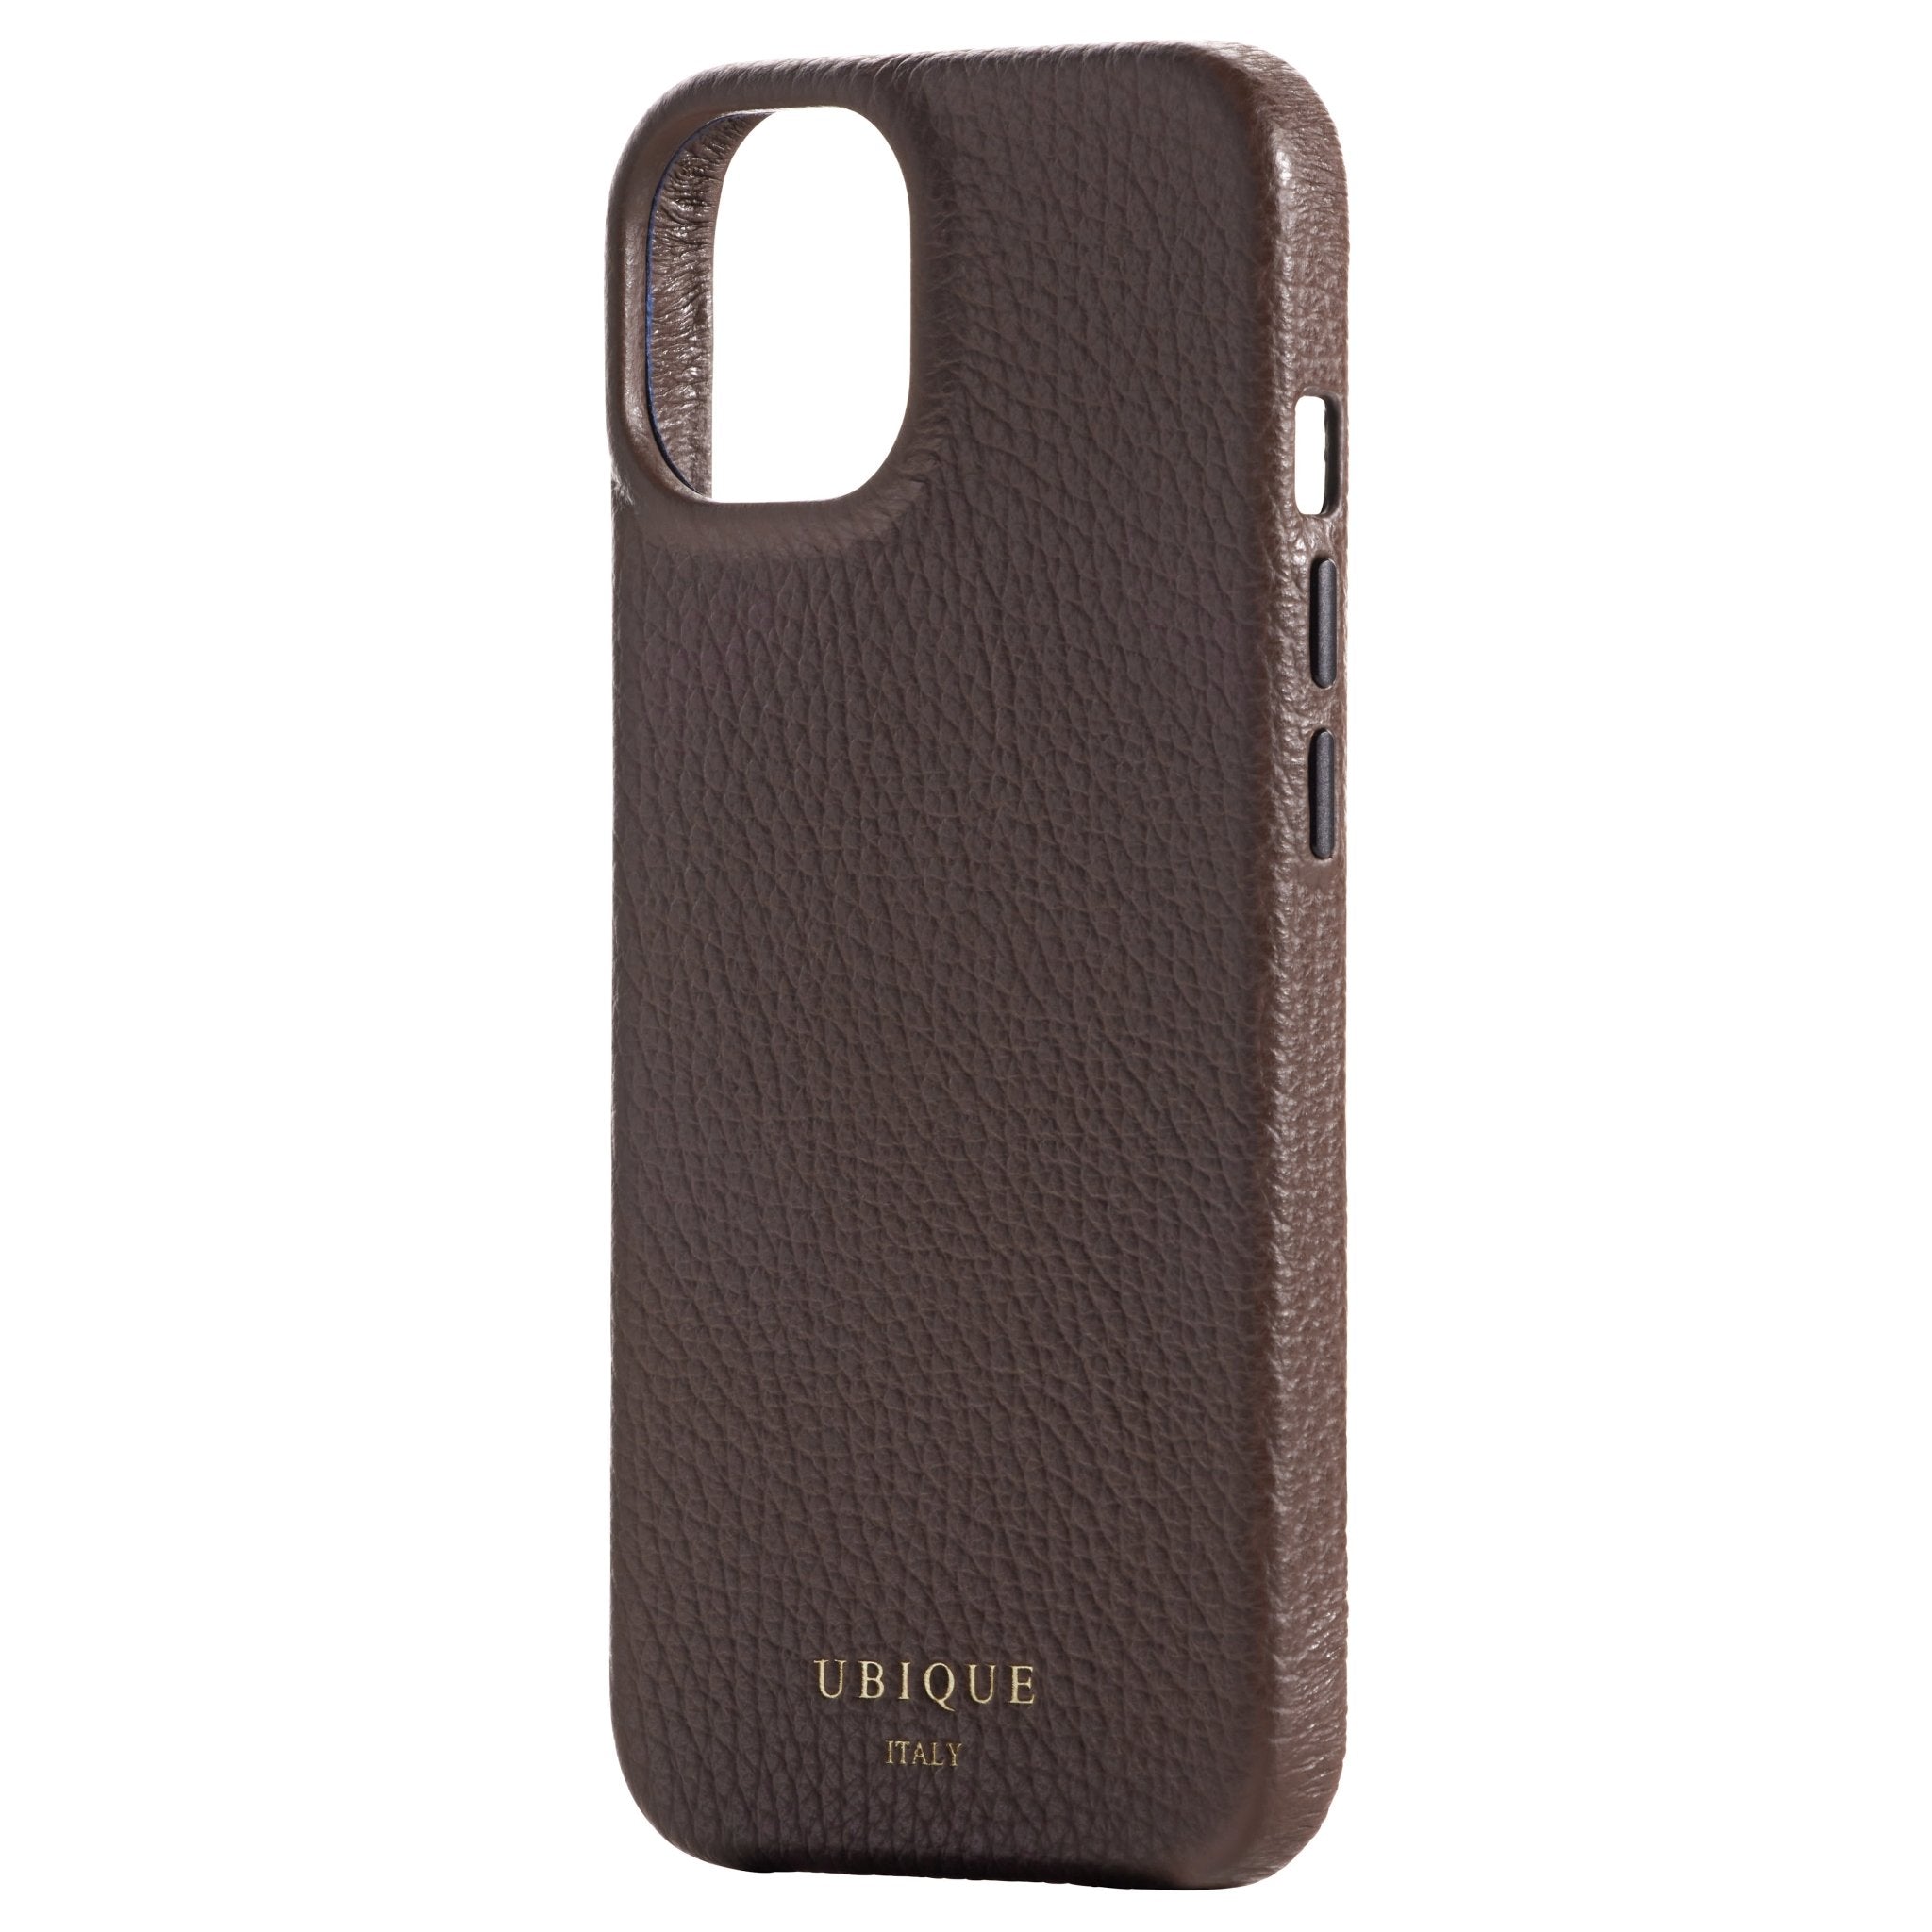 Ubique Italy Luxury iPhone Case 14 Pebble Grain Leather Dark Walnut Angled